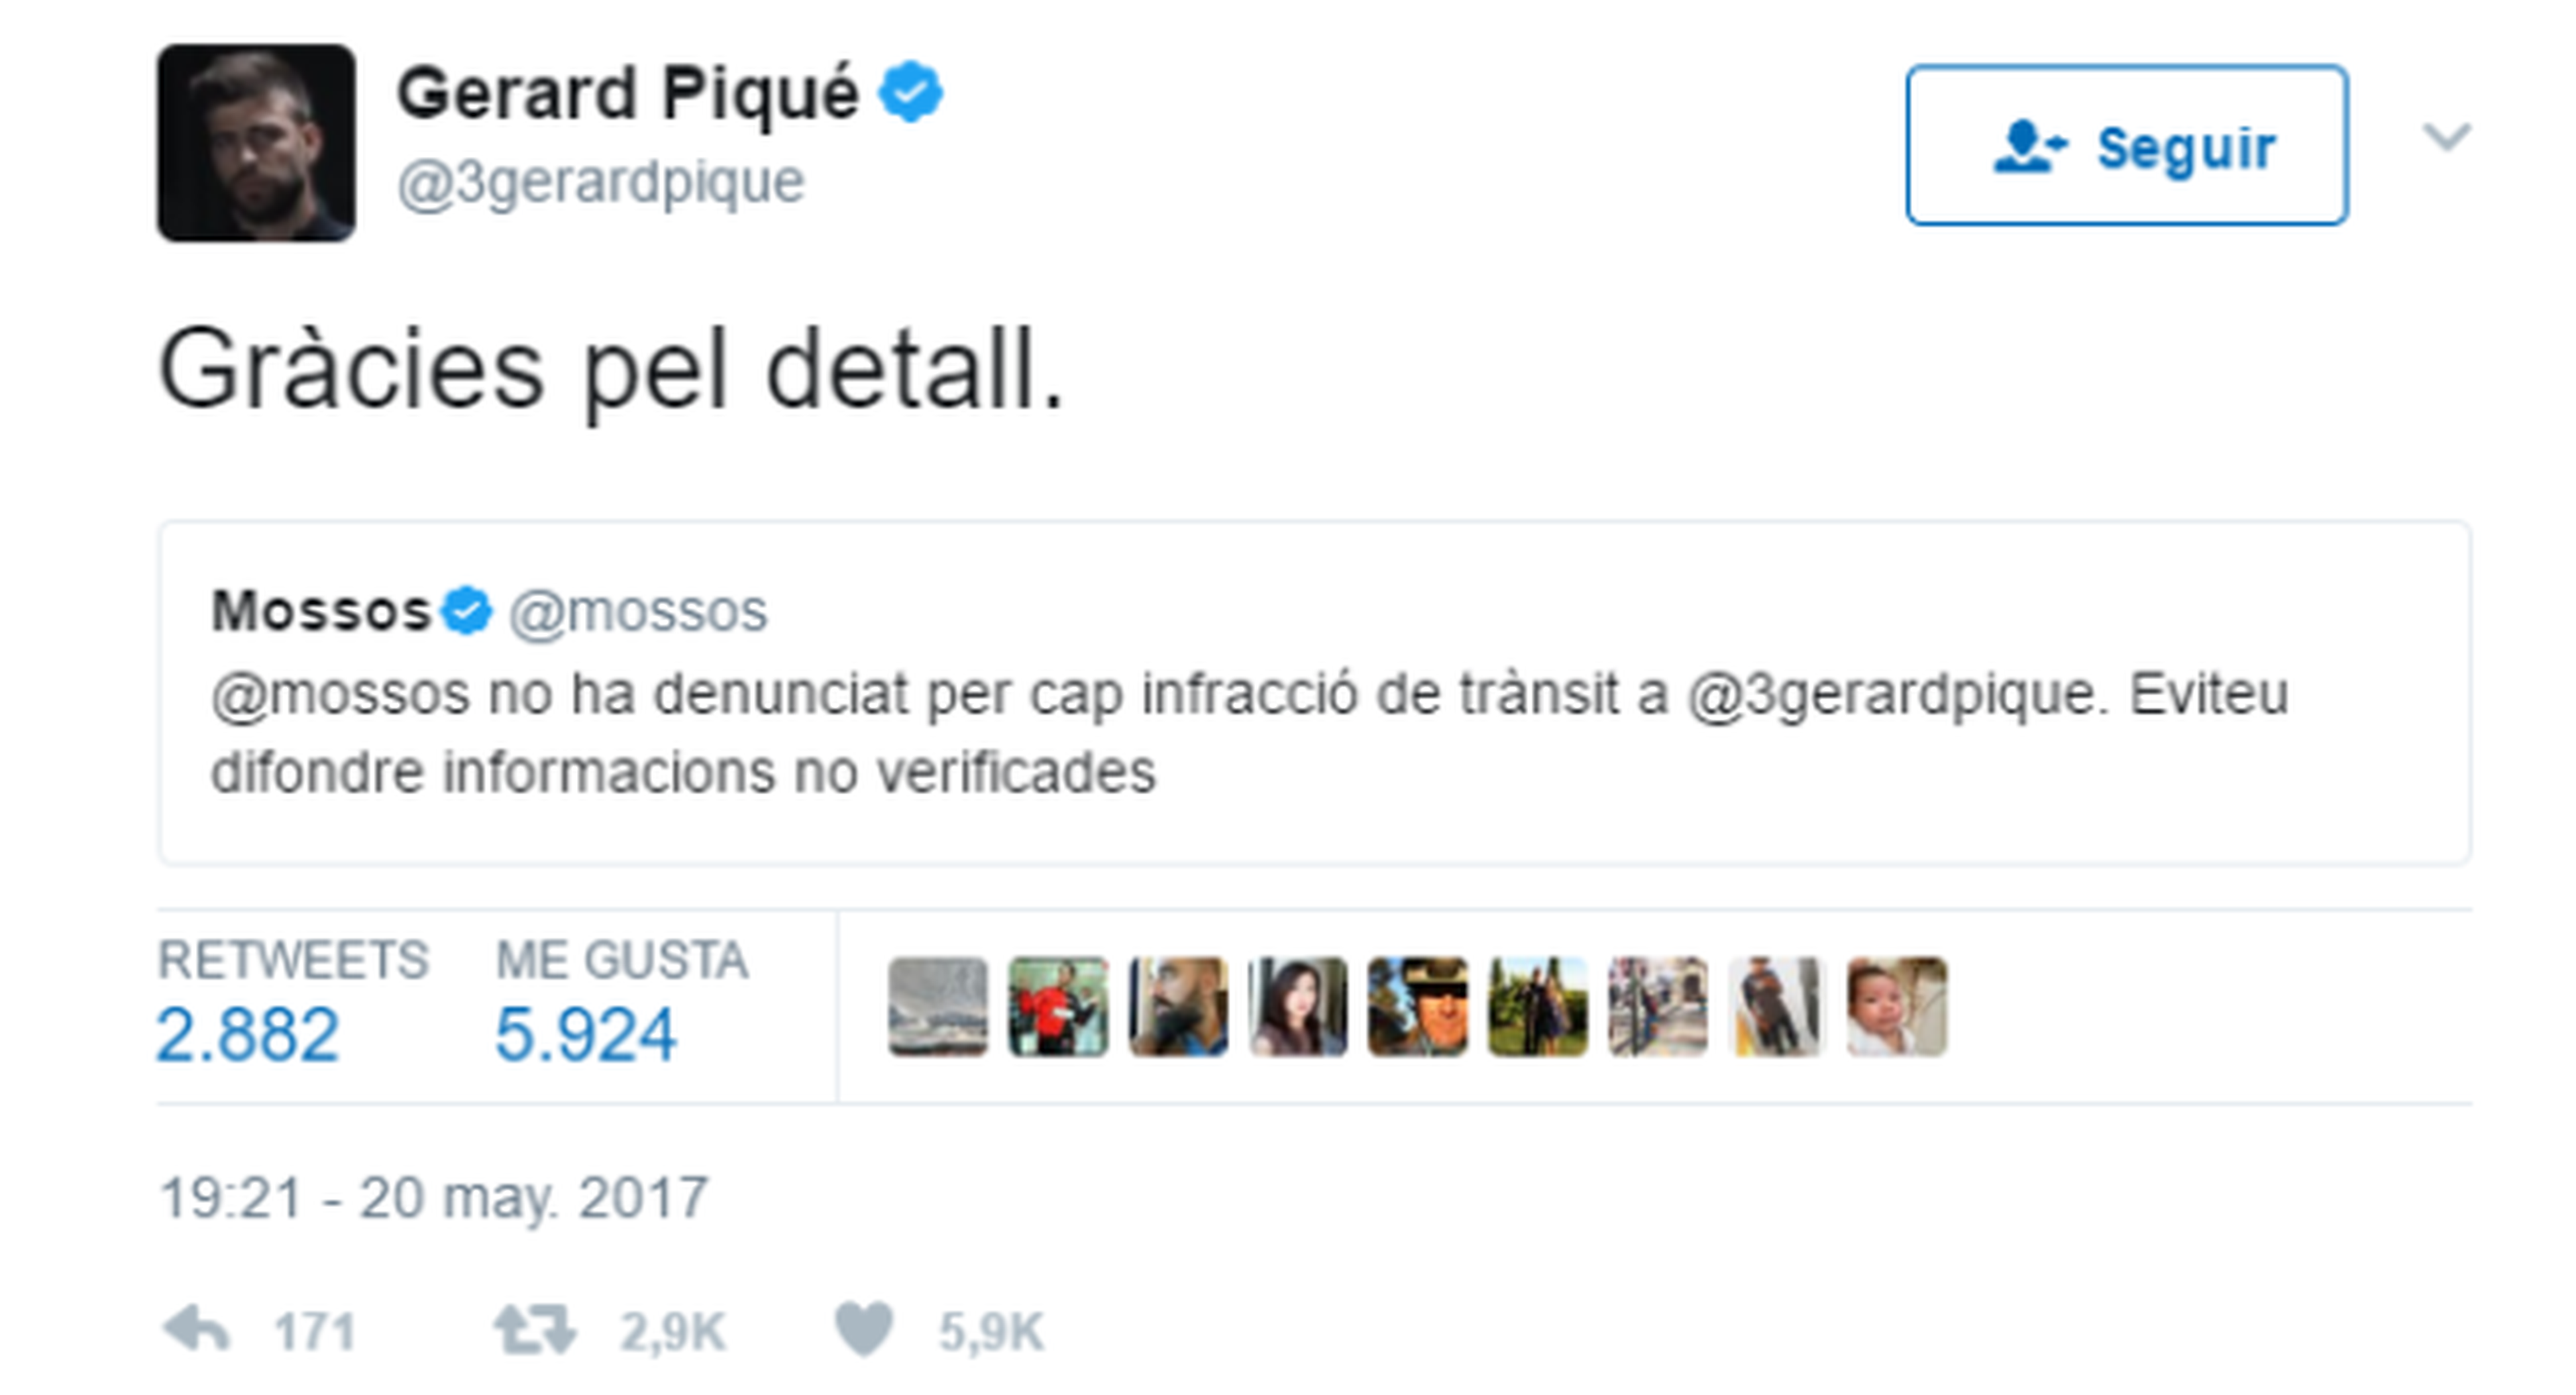 ACTUALIZACIÓN: La falsa pillada de Gerard Piqué